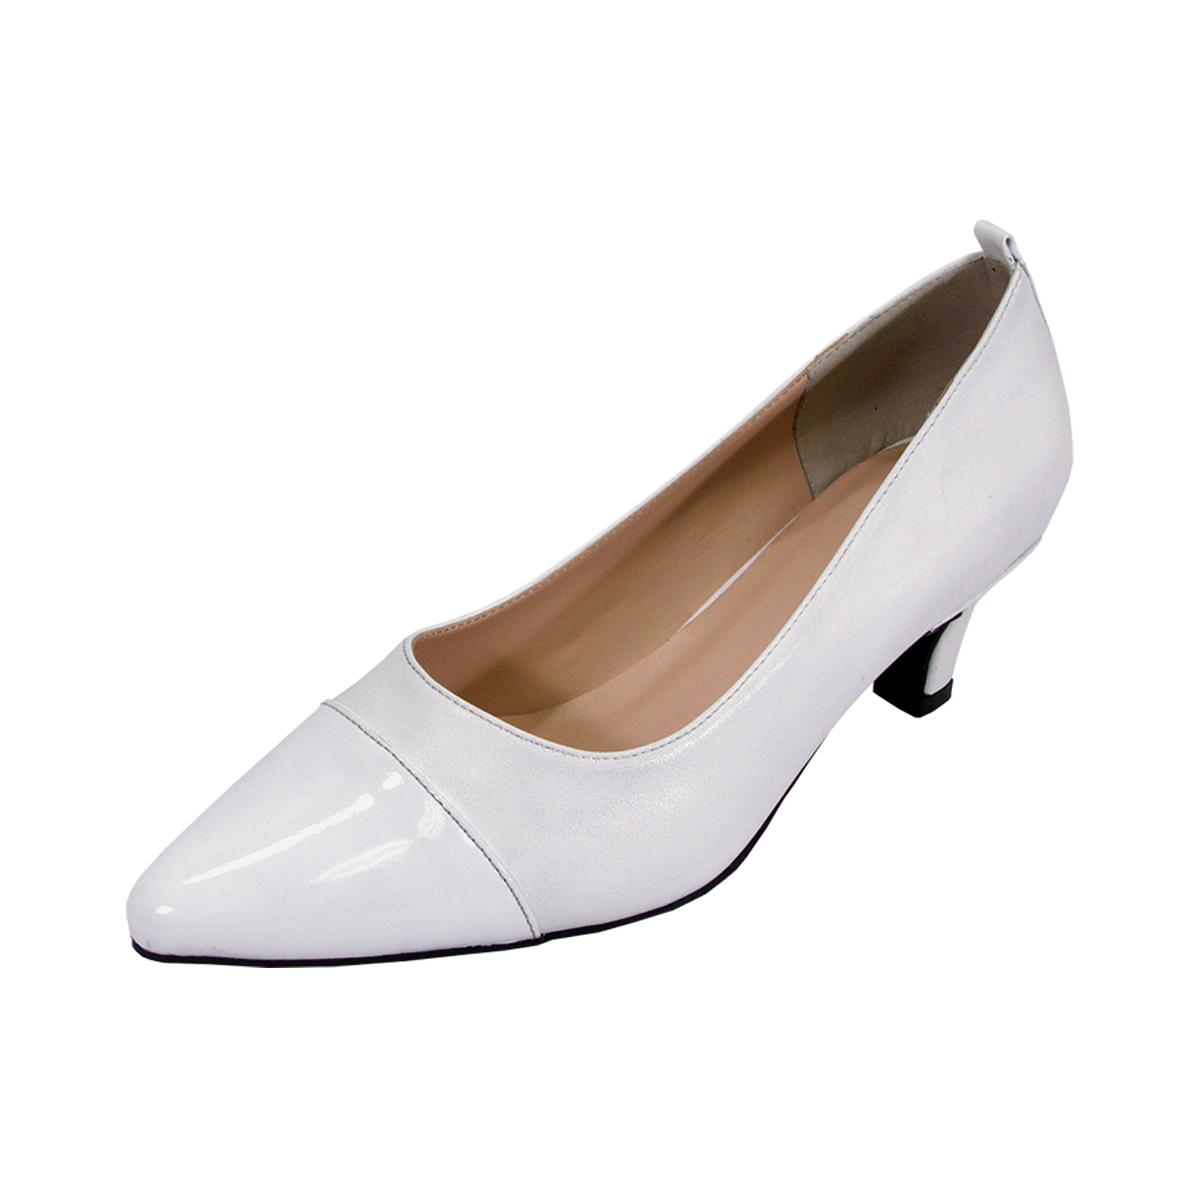 PEERAGE Arlene Women's Wide Width Casual Comfort Mid Heel Dress Shoes for Wedding, Prom, Evening, Work WHITE 8.5 - image 1 of 6